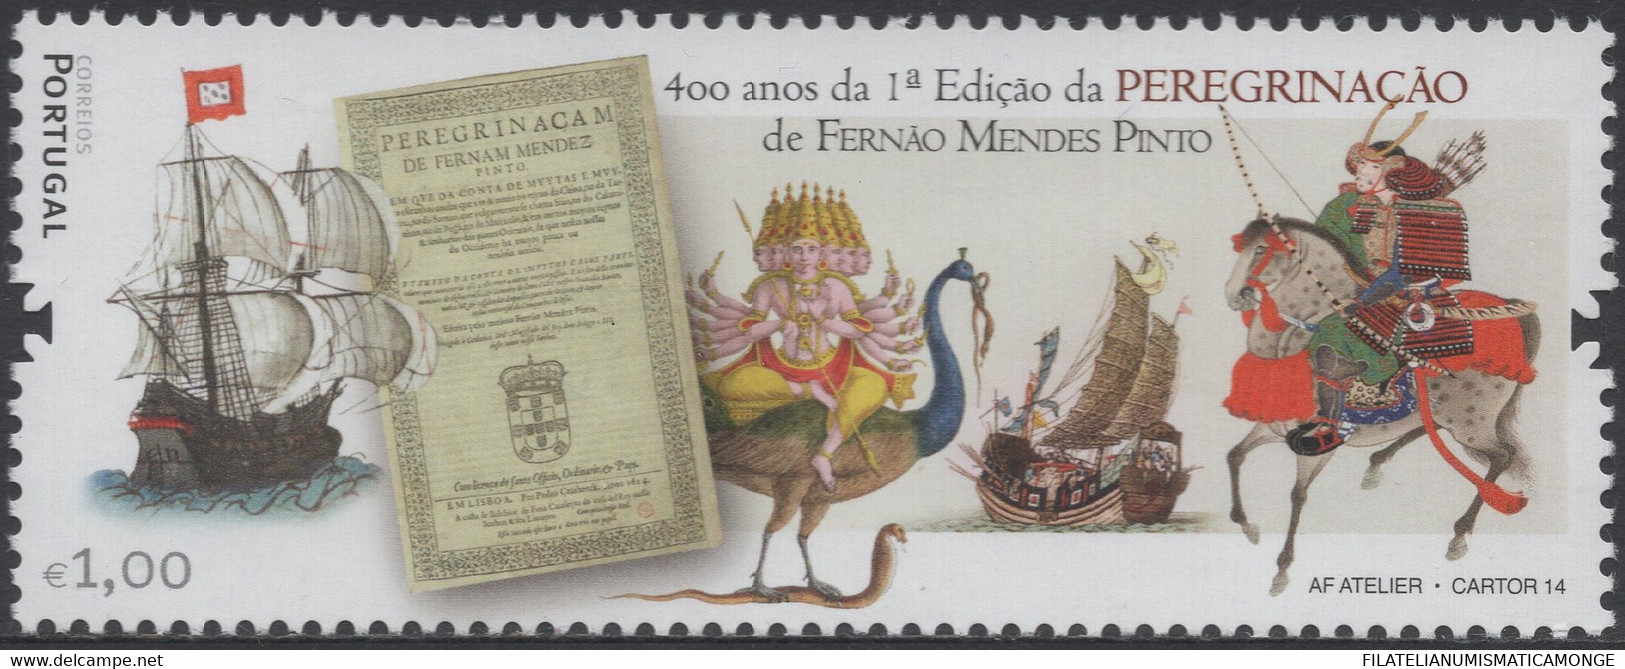 Portugal 2014 Correo 3885 **/MNH Peregrinacion Mendes Pinto. (1val.) - Neufs